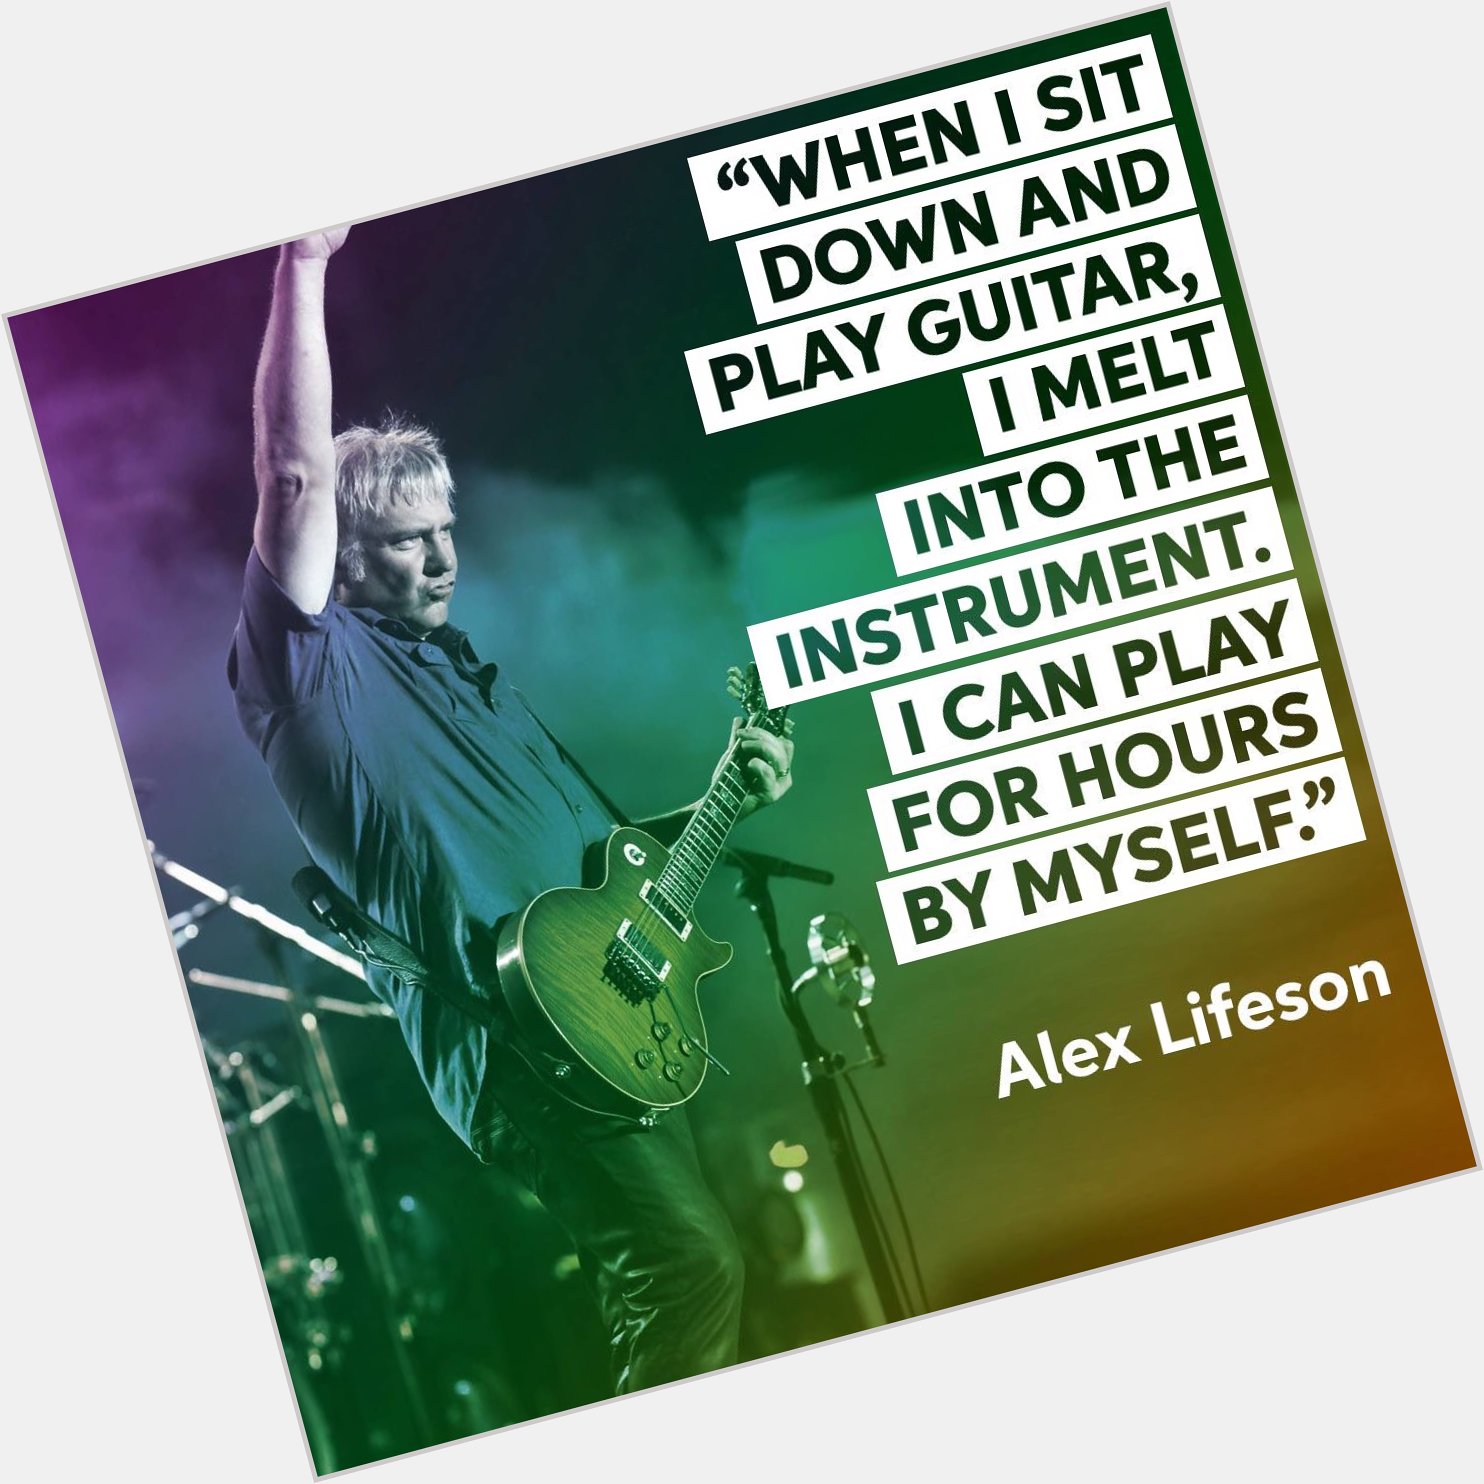  Happy 64th birthday to Alex Lifeson!  